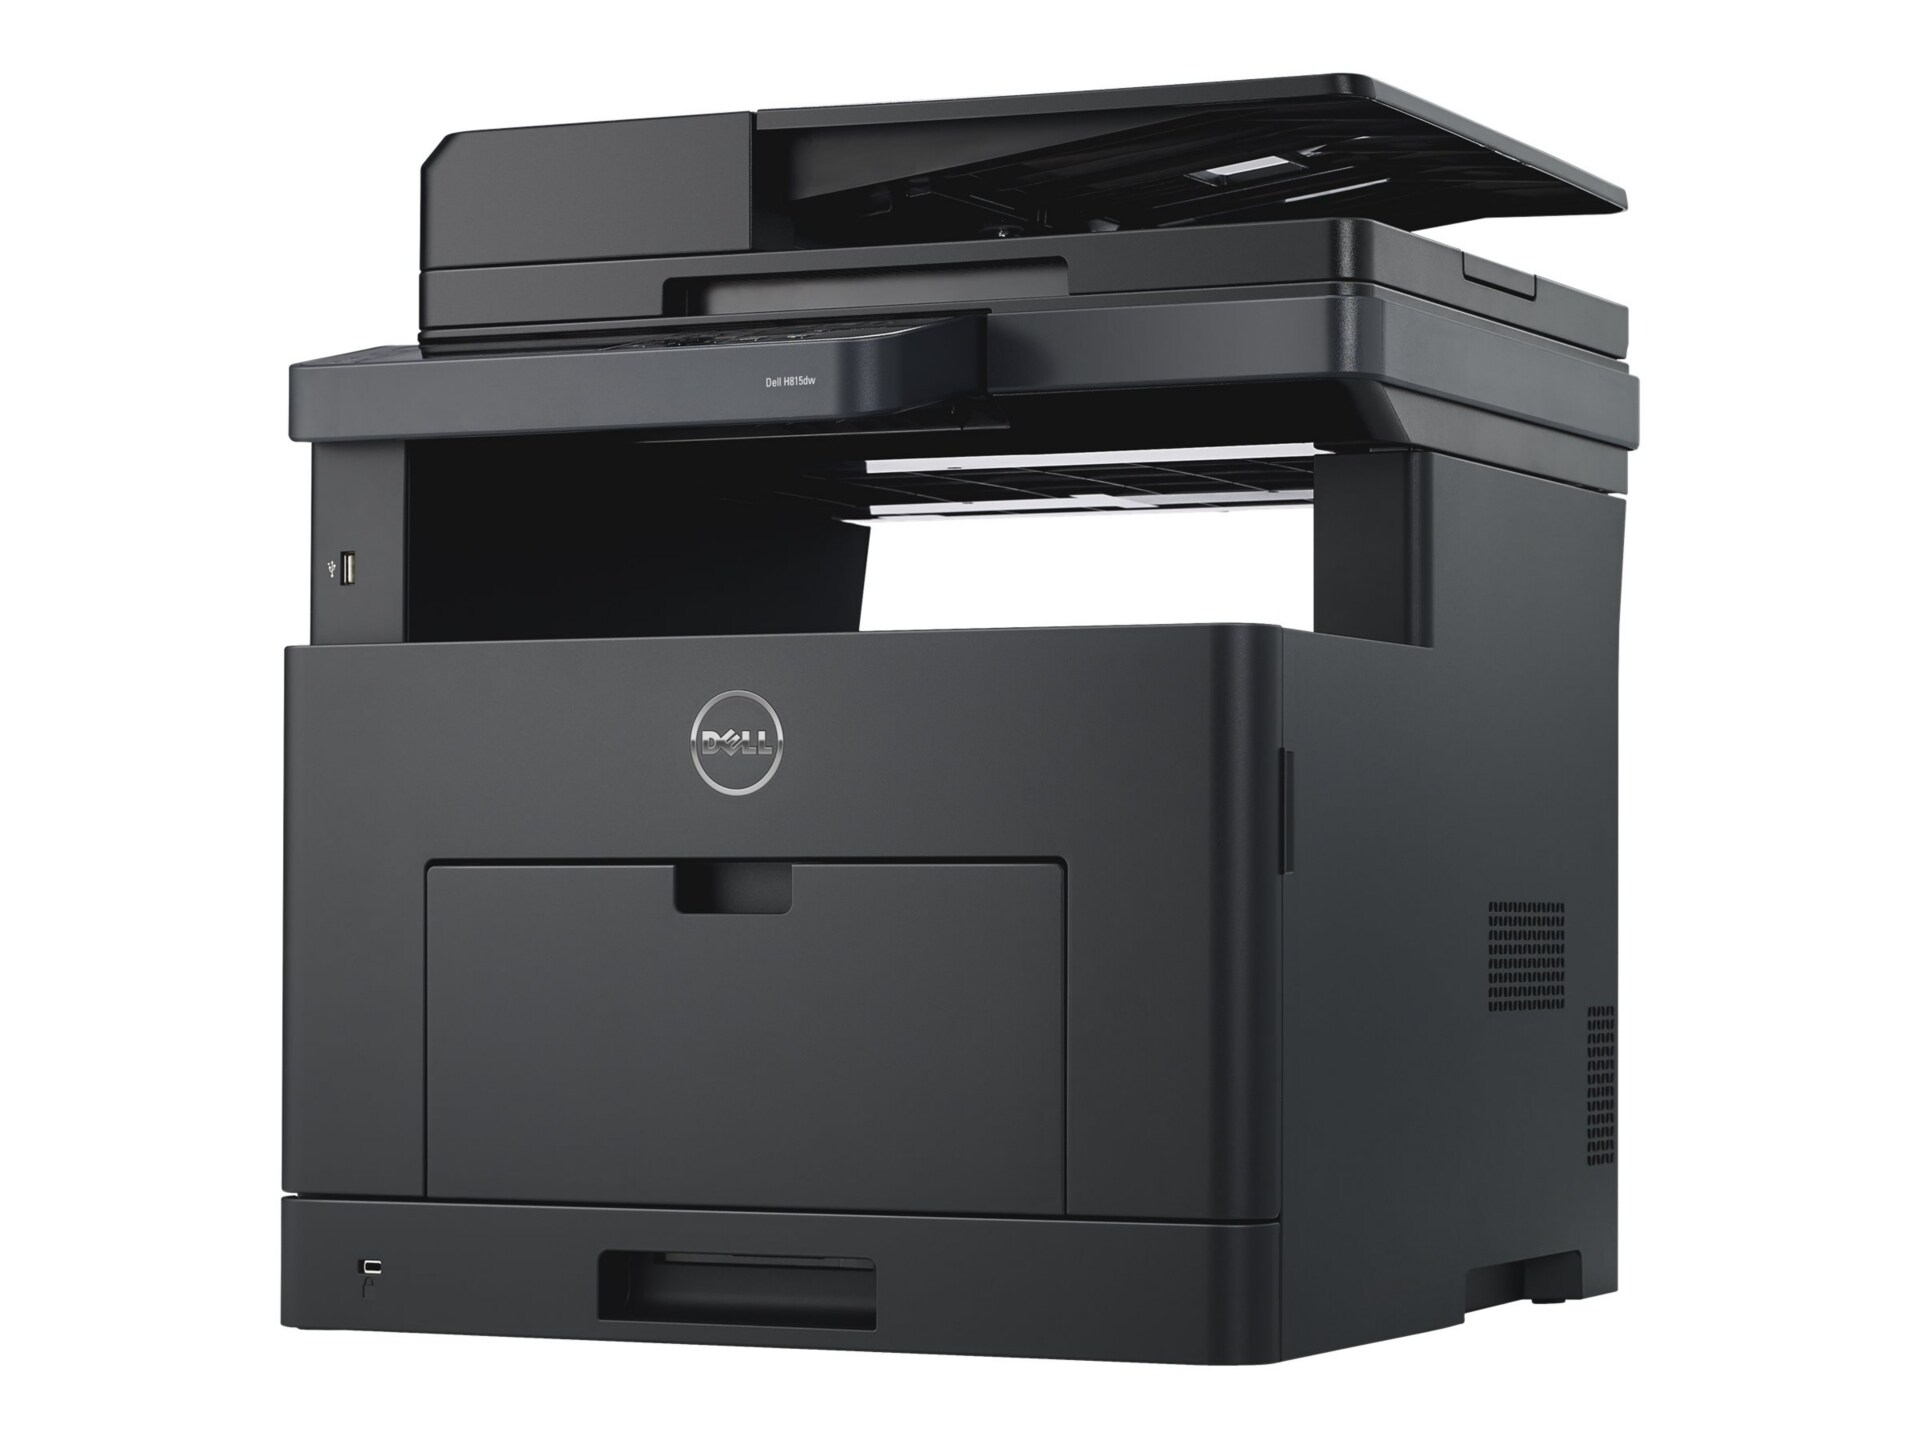 Dell Cloud Multifunction Printer H815dw